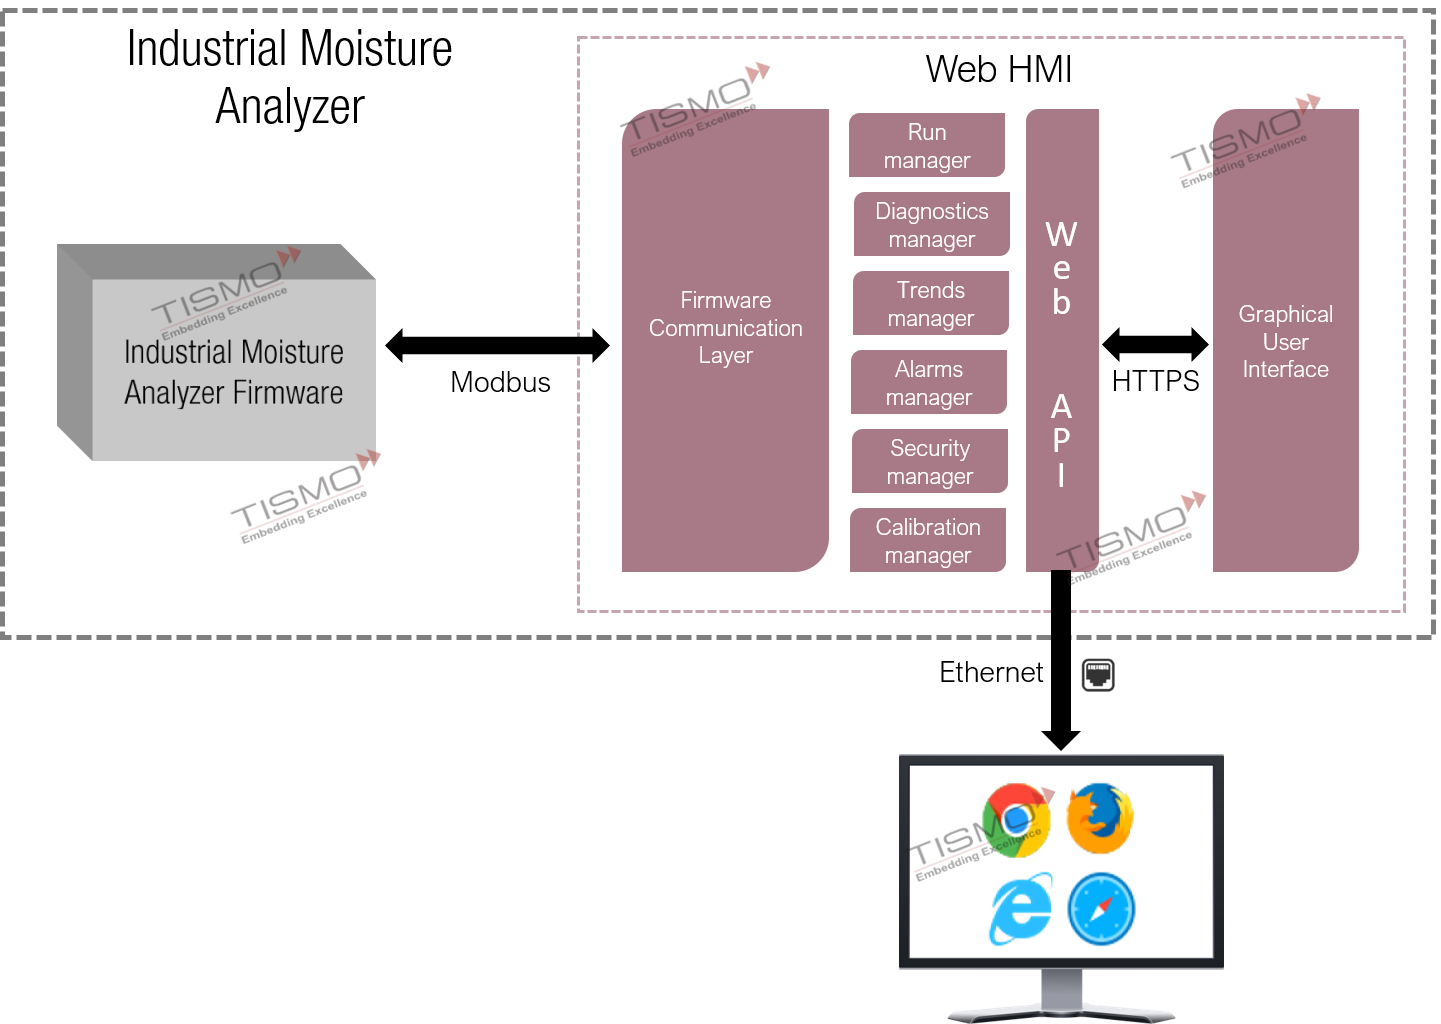 Architecture diagram of Web HMI for Industrial Moisture Analyzer